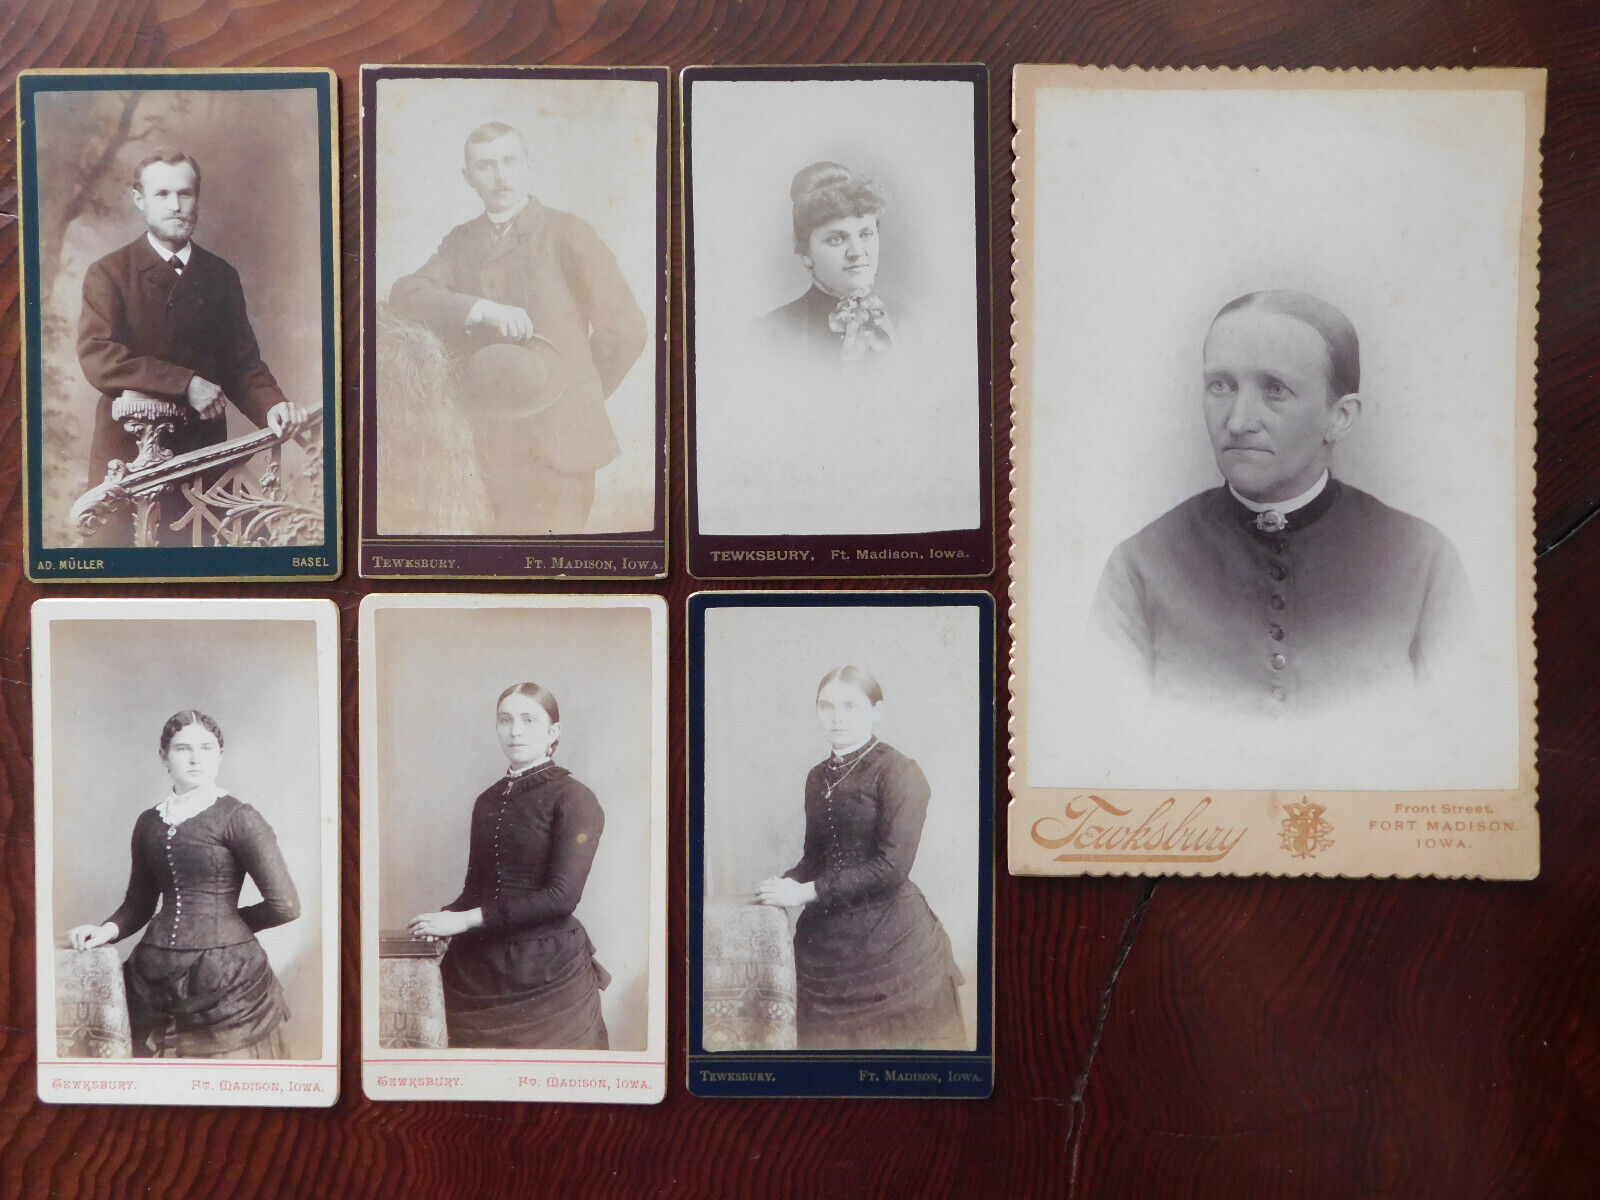 Lot of 7 Antique Cabinet Card Portrait Photos  - late 1800s men and women